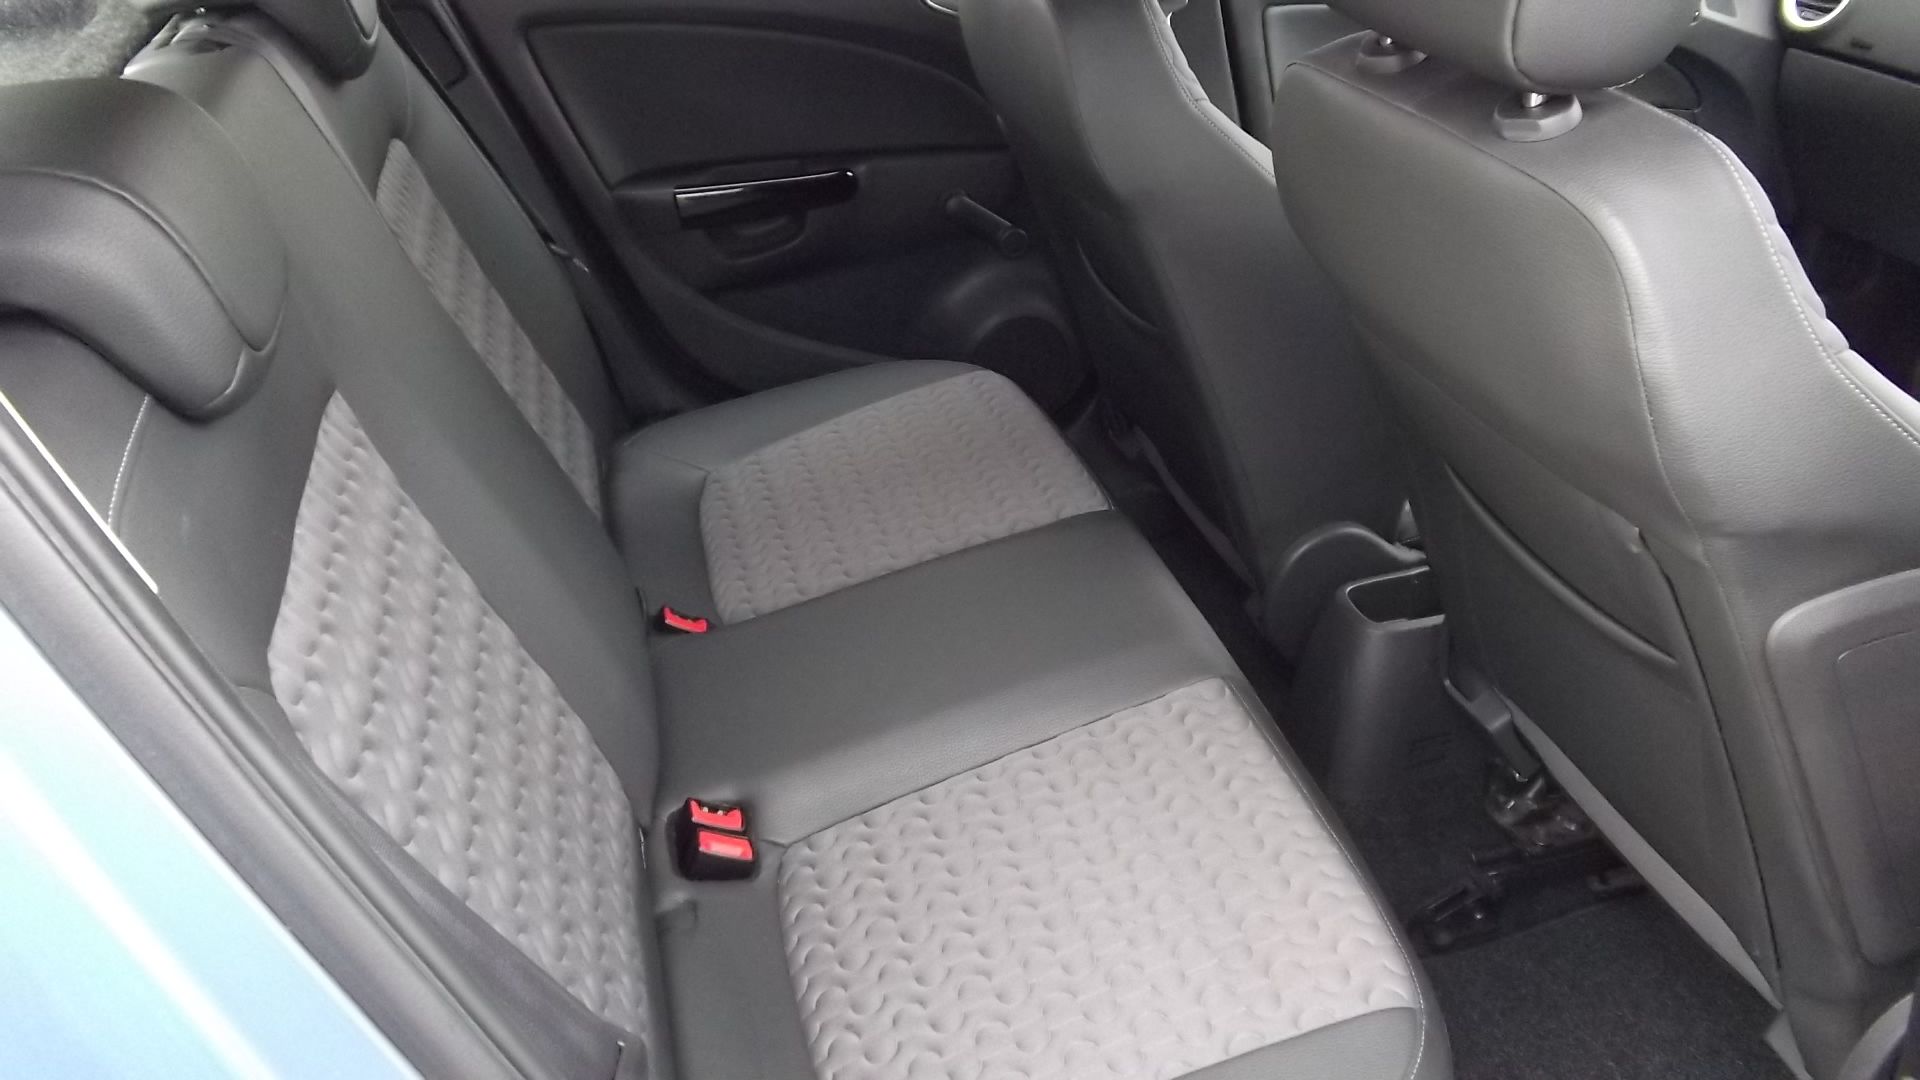 2014 Vauxhall Corsa Se 5Dr Hatchback - Full Service History - CL505 - NO VAT ON THE HAMMER - - Image 11 of 24